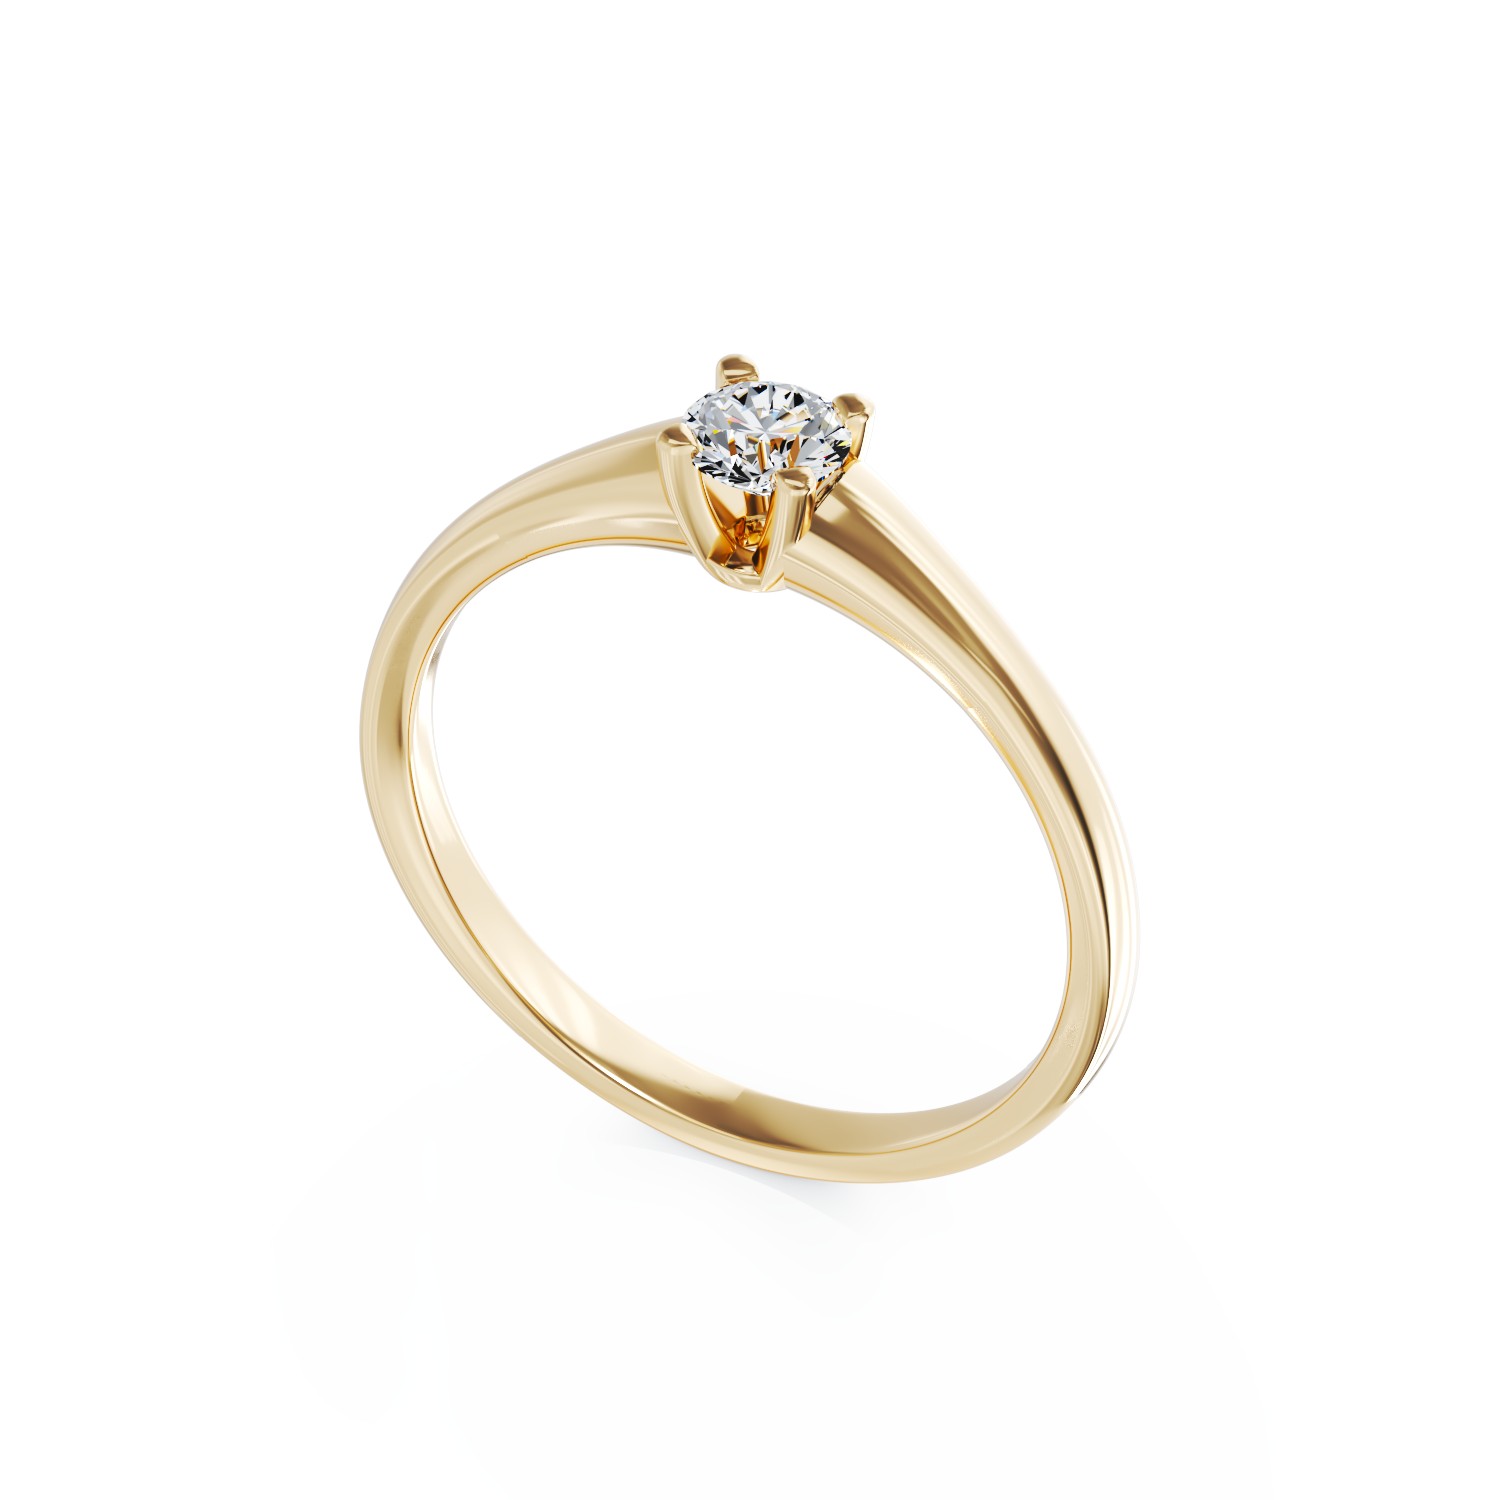 Inel de logodna din aur galben de 18K cu un diamant solitaire de 0.145ct